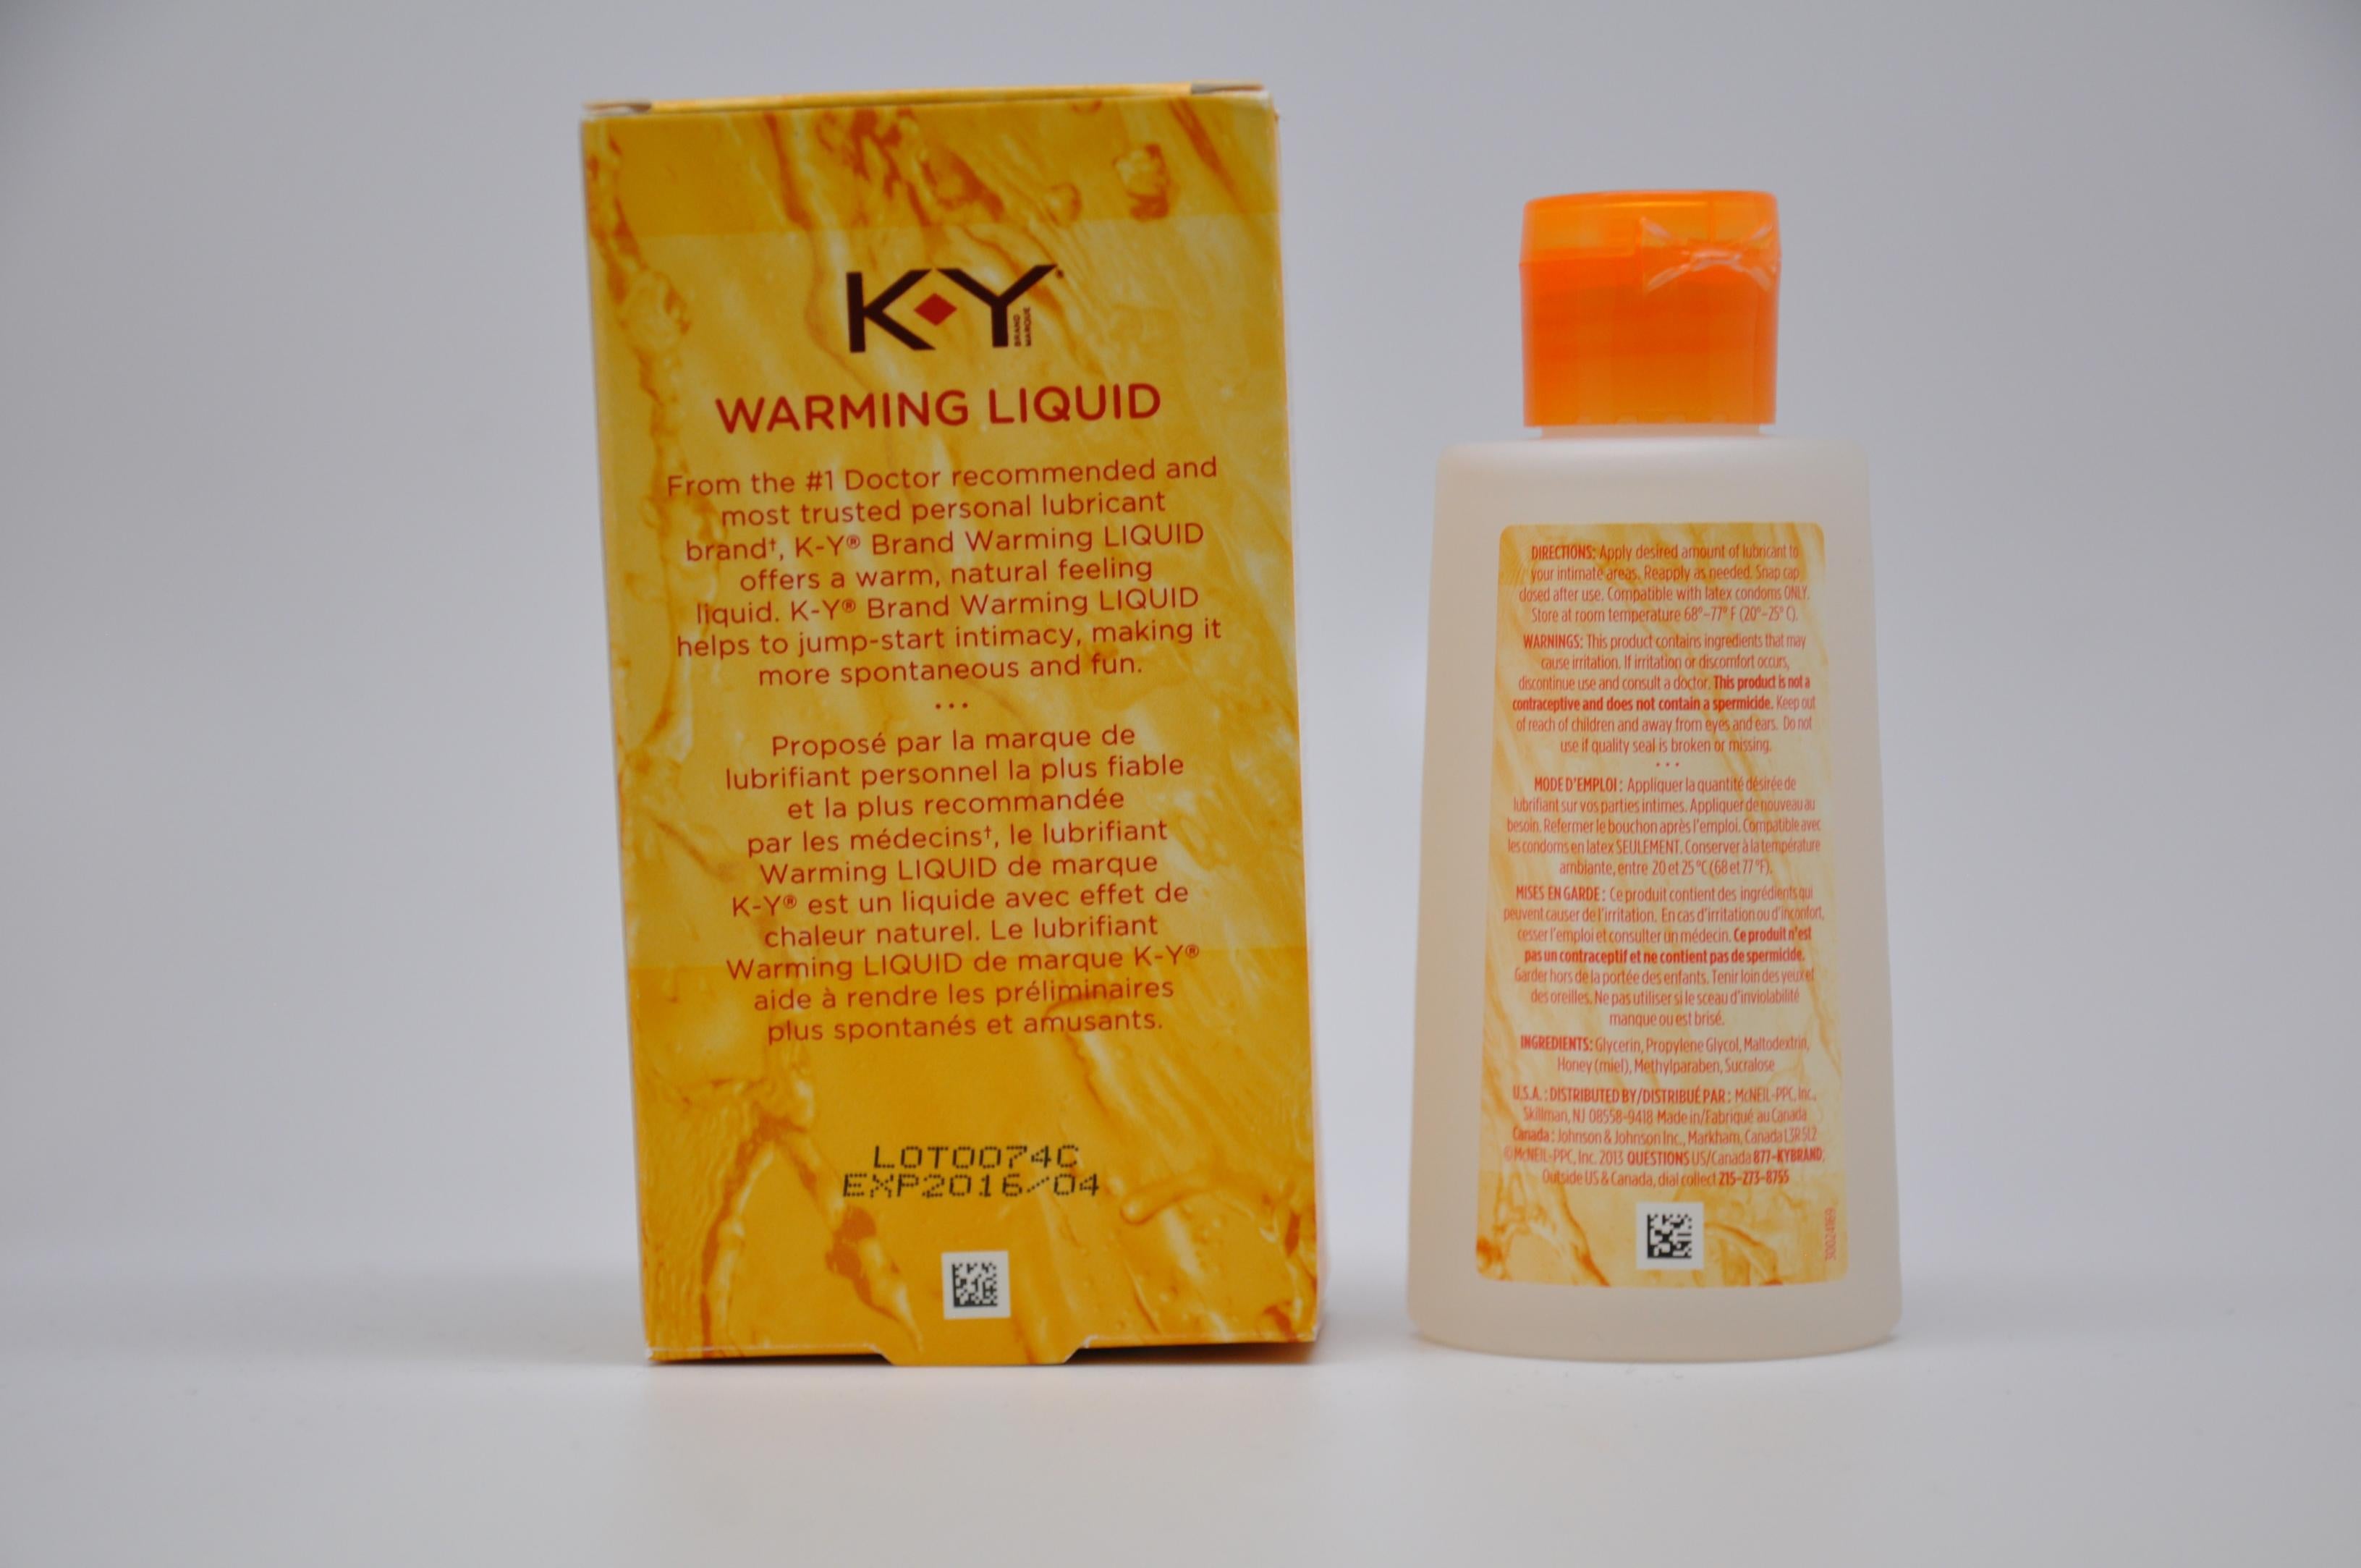 K-y Warming Liquid Paradise Products